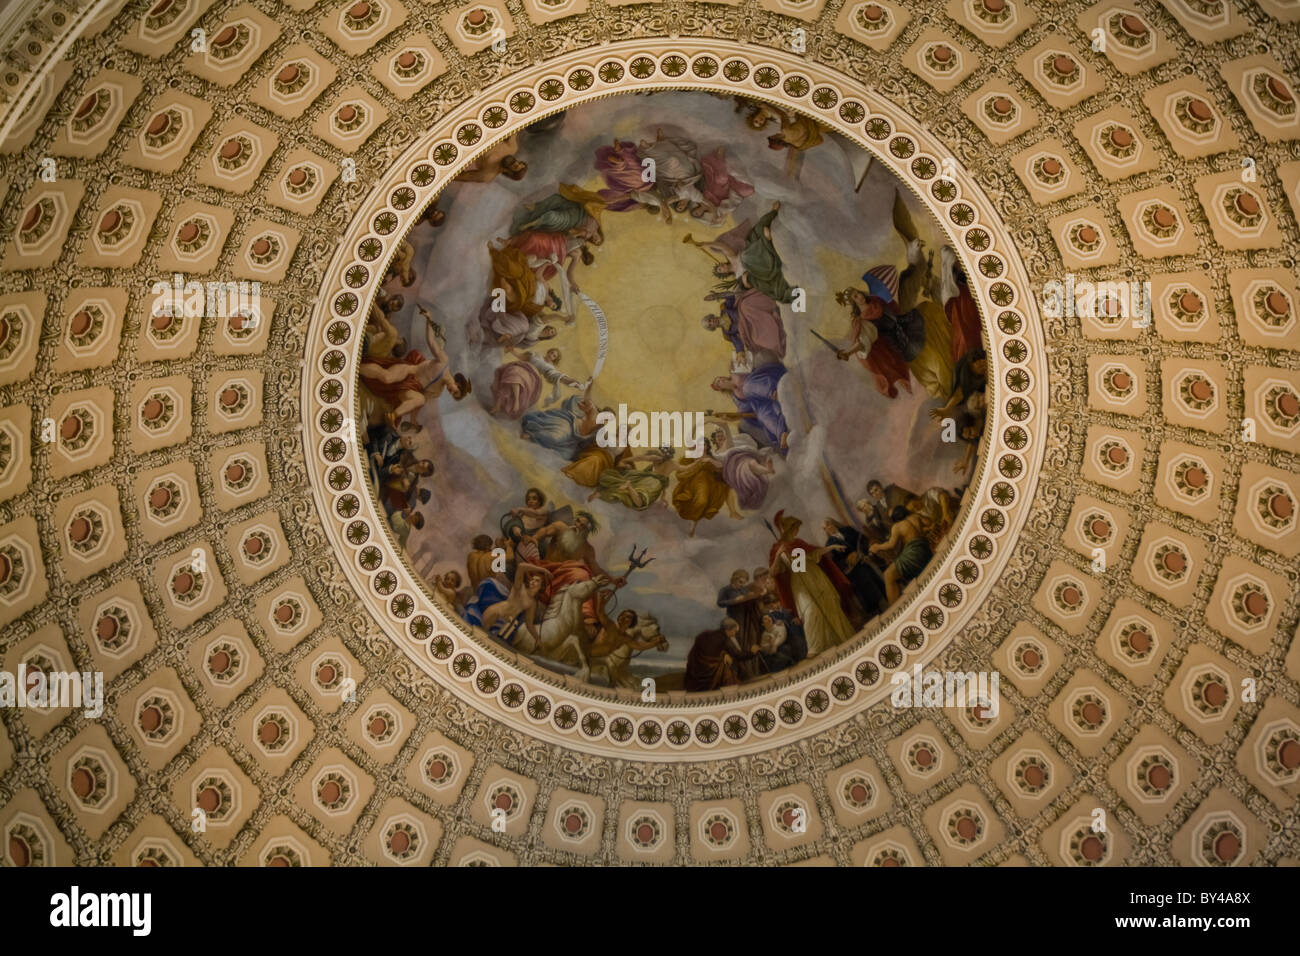 Beautiful dome of the Rotunda in the U.S. Capitol building in Washington, D. C. depicting George Washington. Stock Photo